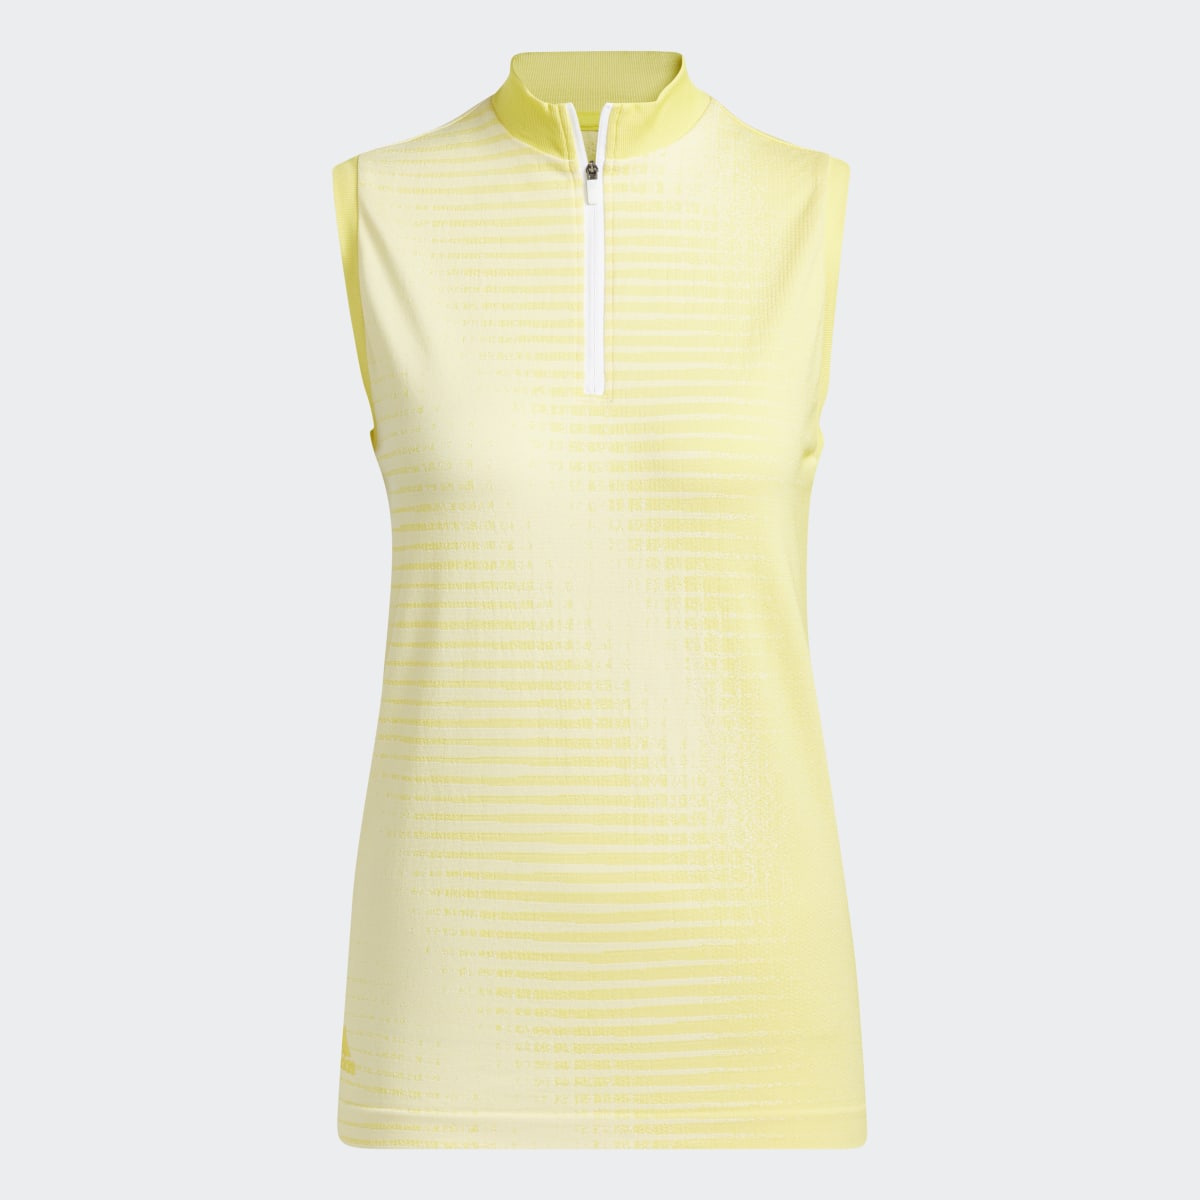 Adidas Primeknit Sleeveless Golf Polo Shirt. 8